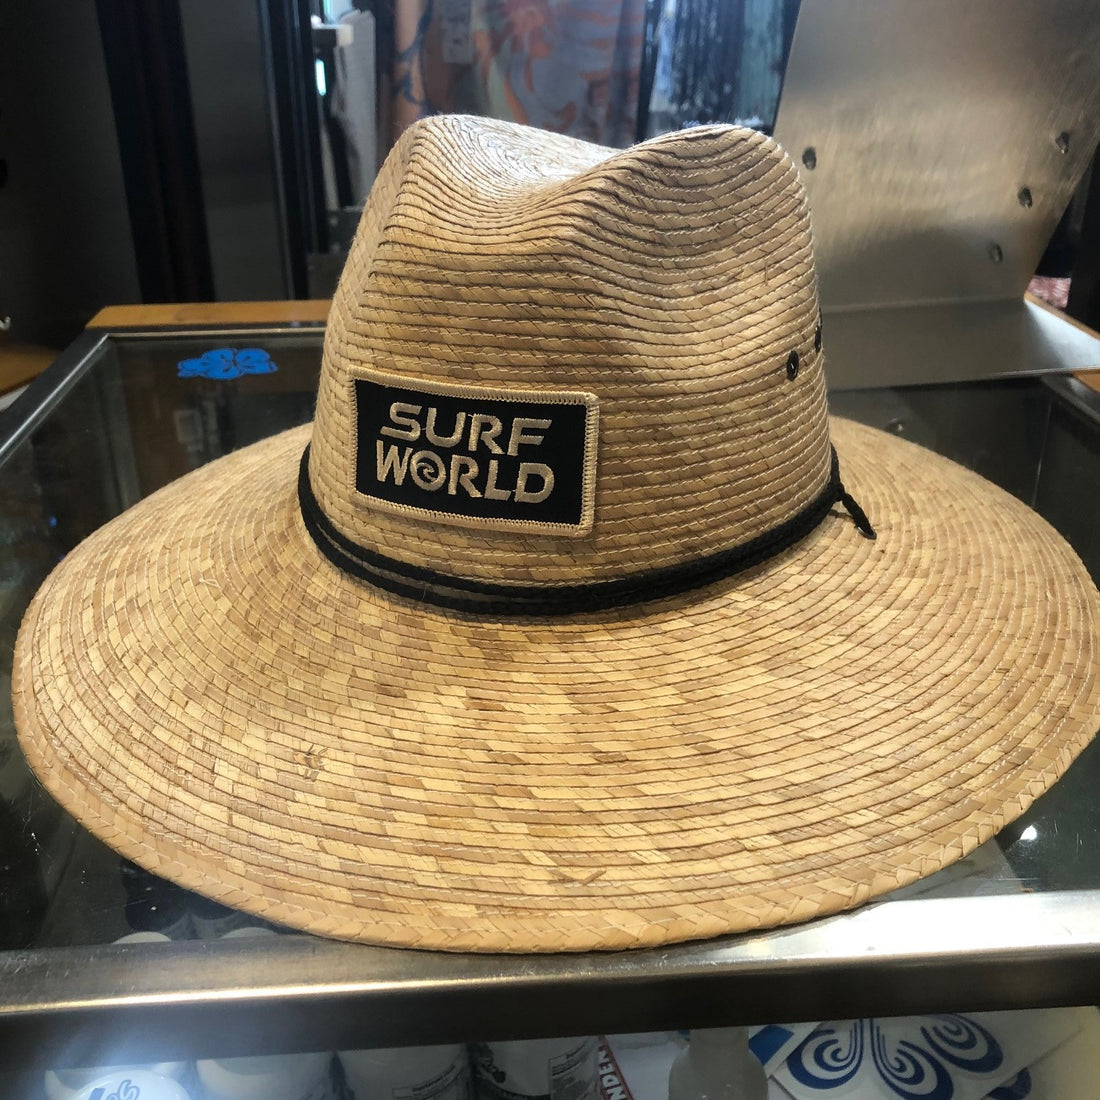 Lifeguard hats for Tortuga Music Festival